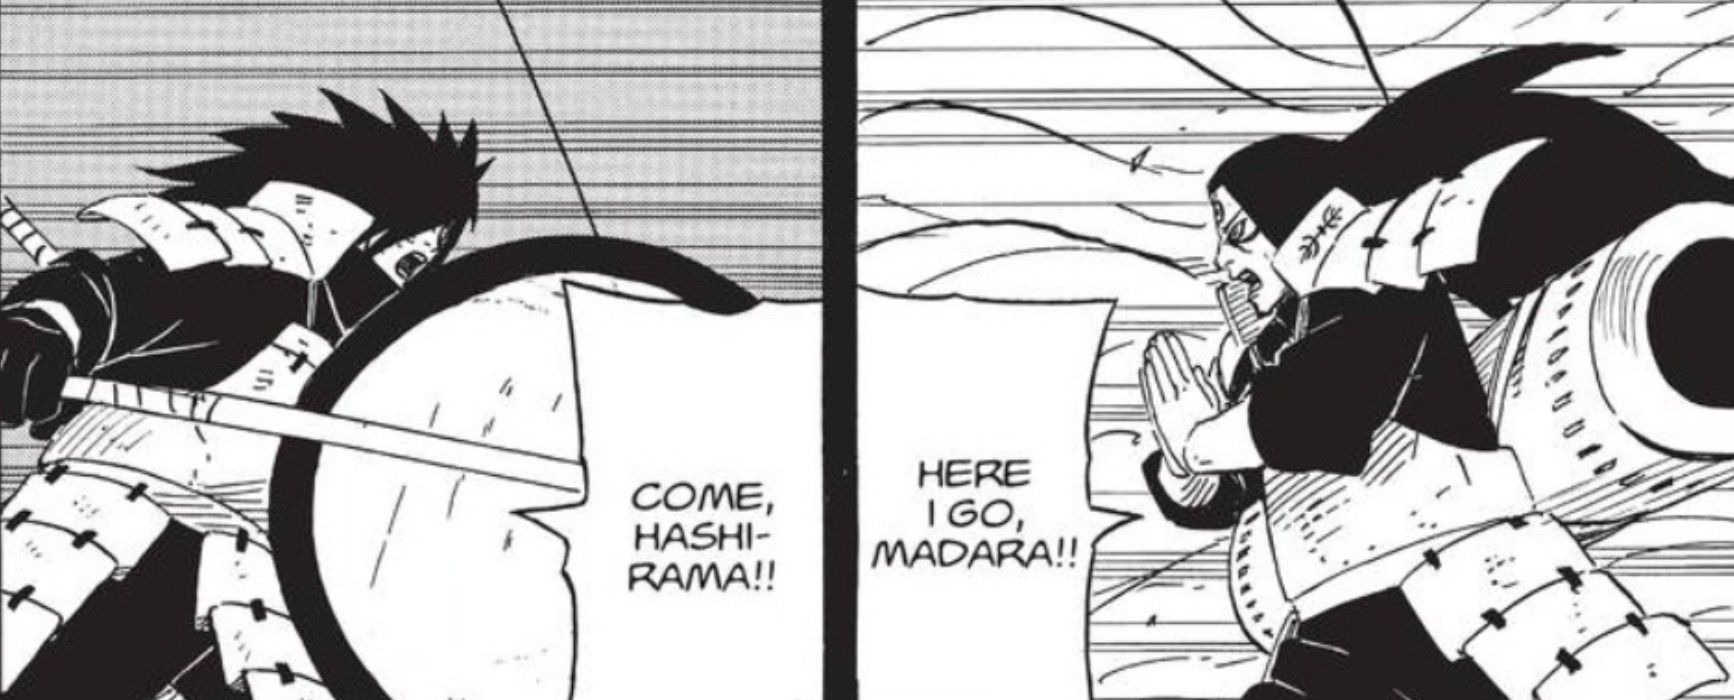 Madara versus Hashirama